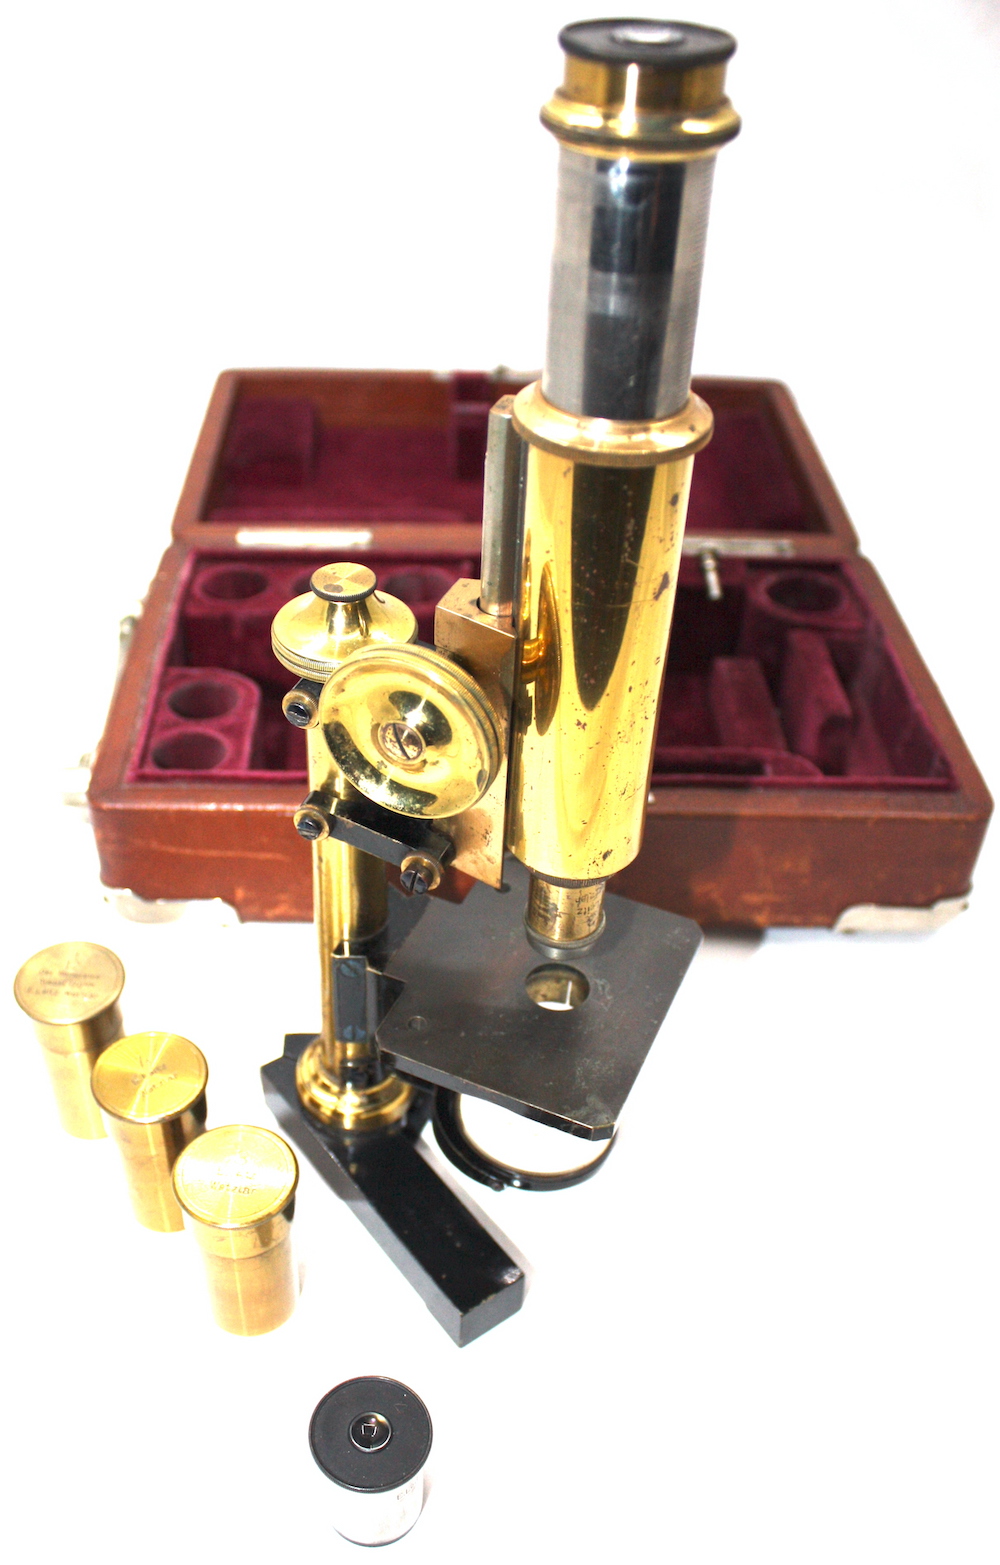 Travel Leitz Microscope in Leather Case